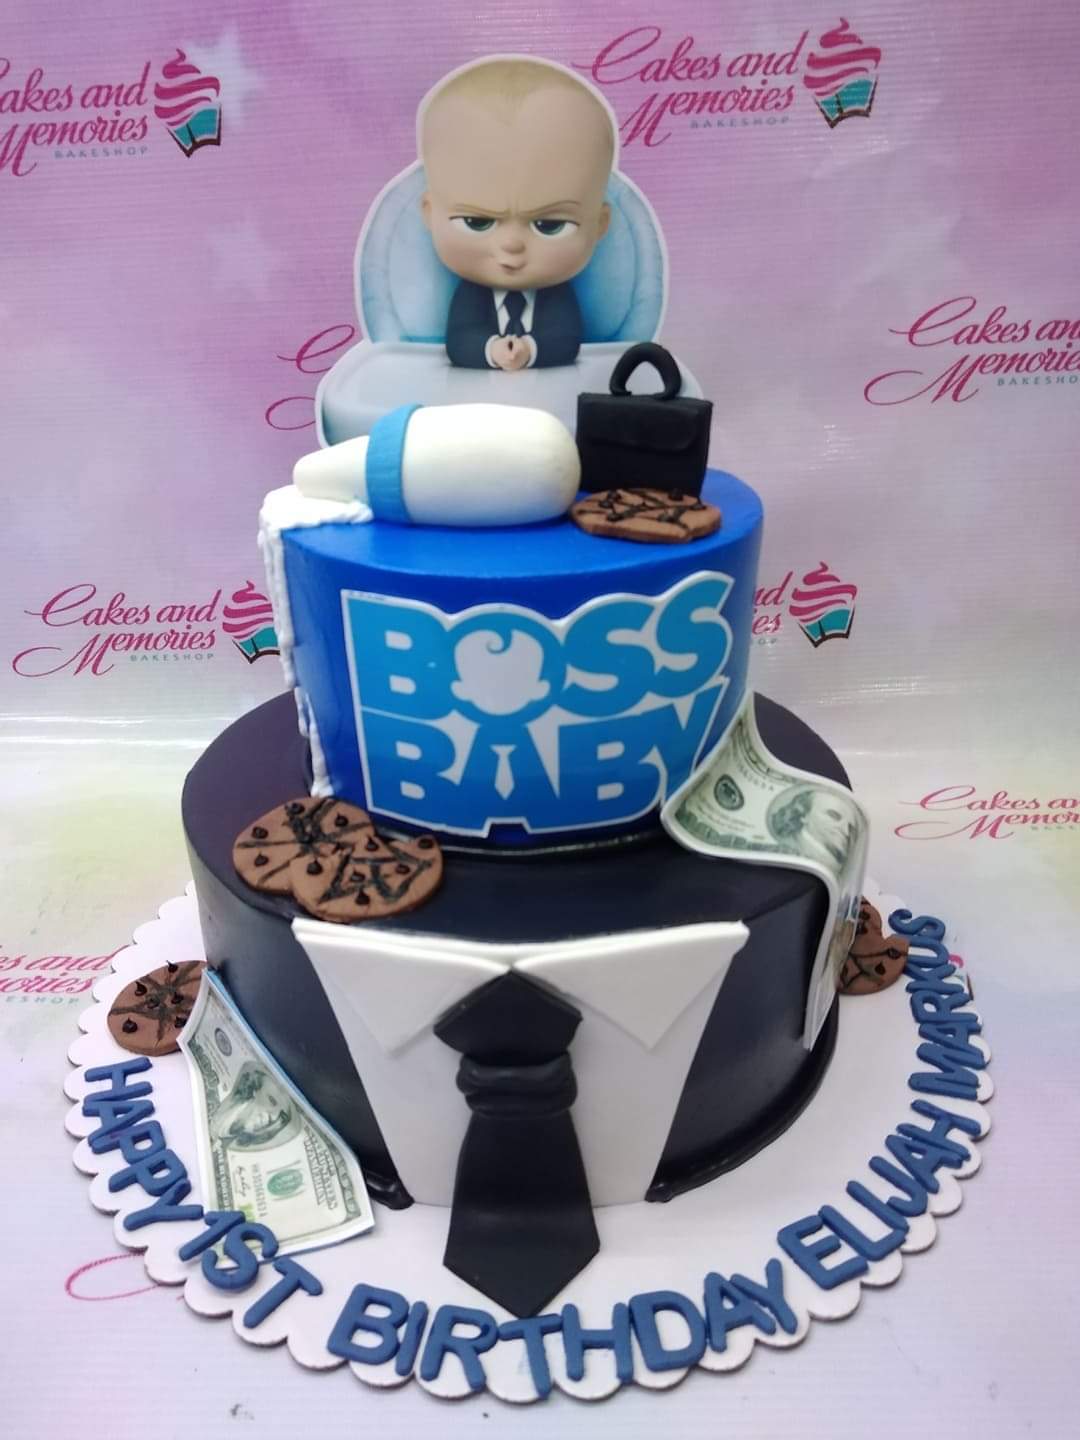 Happy Birthday Big Boss ! 🤴 • • •... - Yummy Tummy Pastries | Facebook